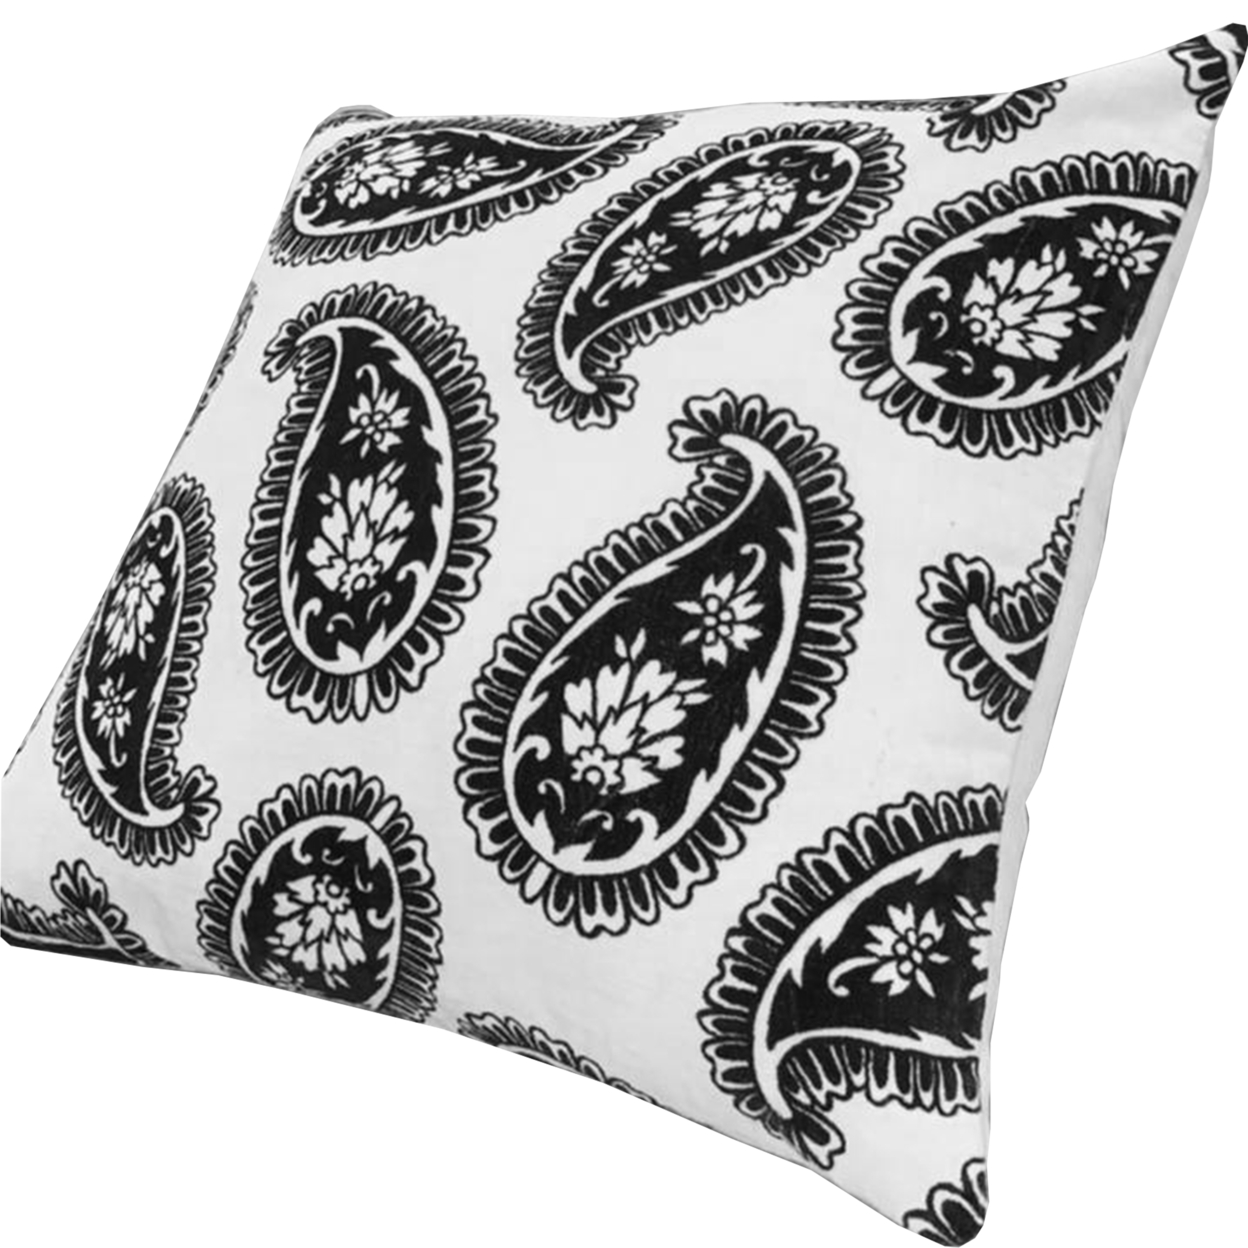 20 X 20 Square Accent Throw Pillows, Paisley Print, Set Of 2, Black, White